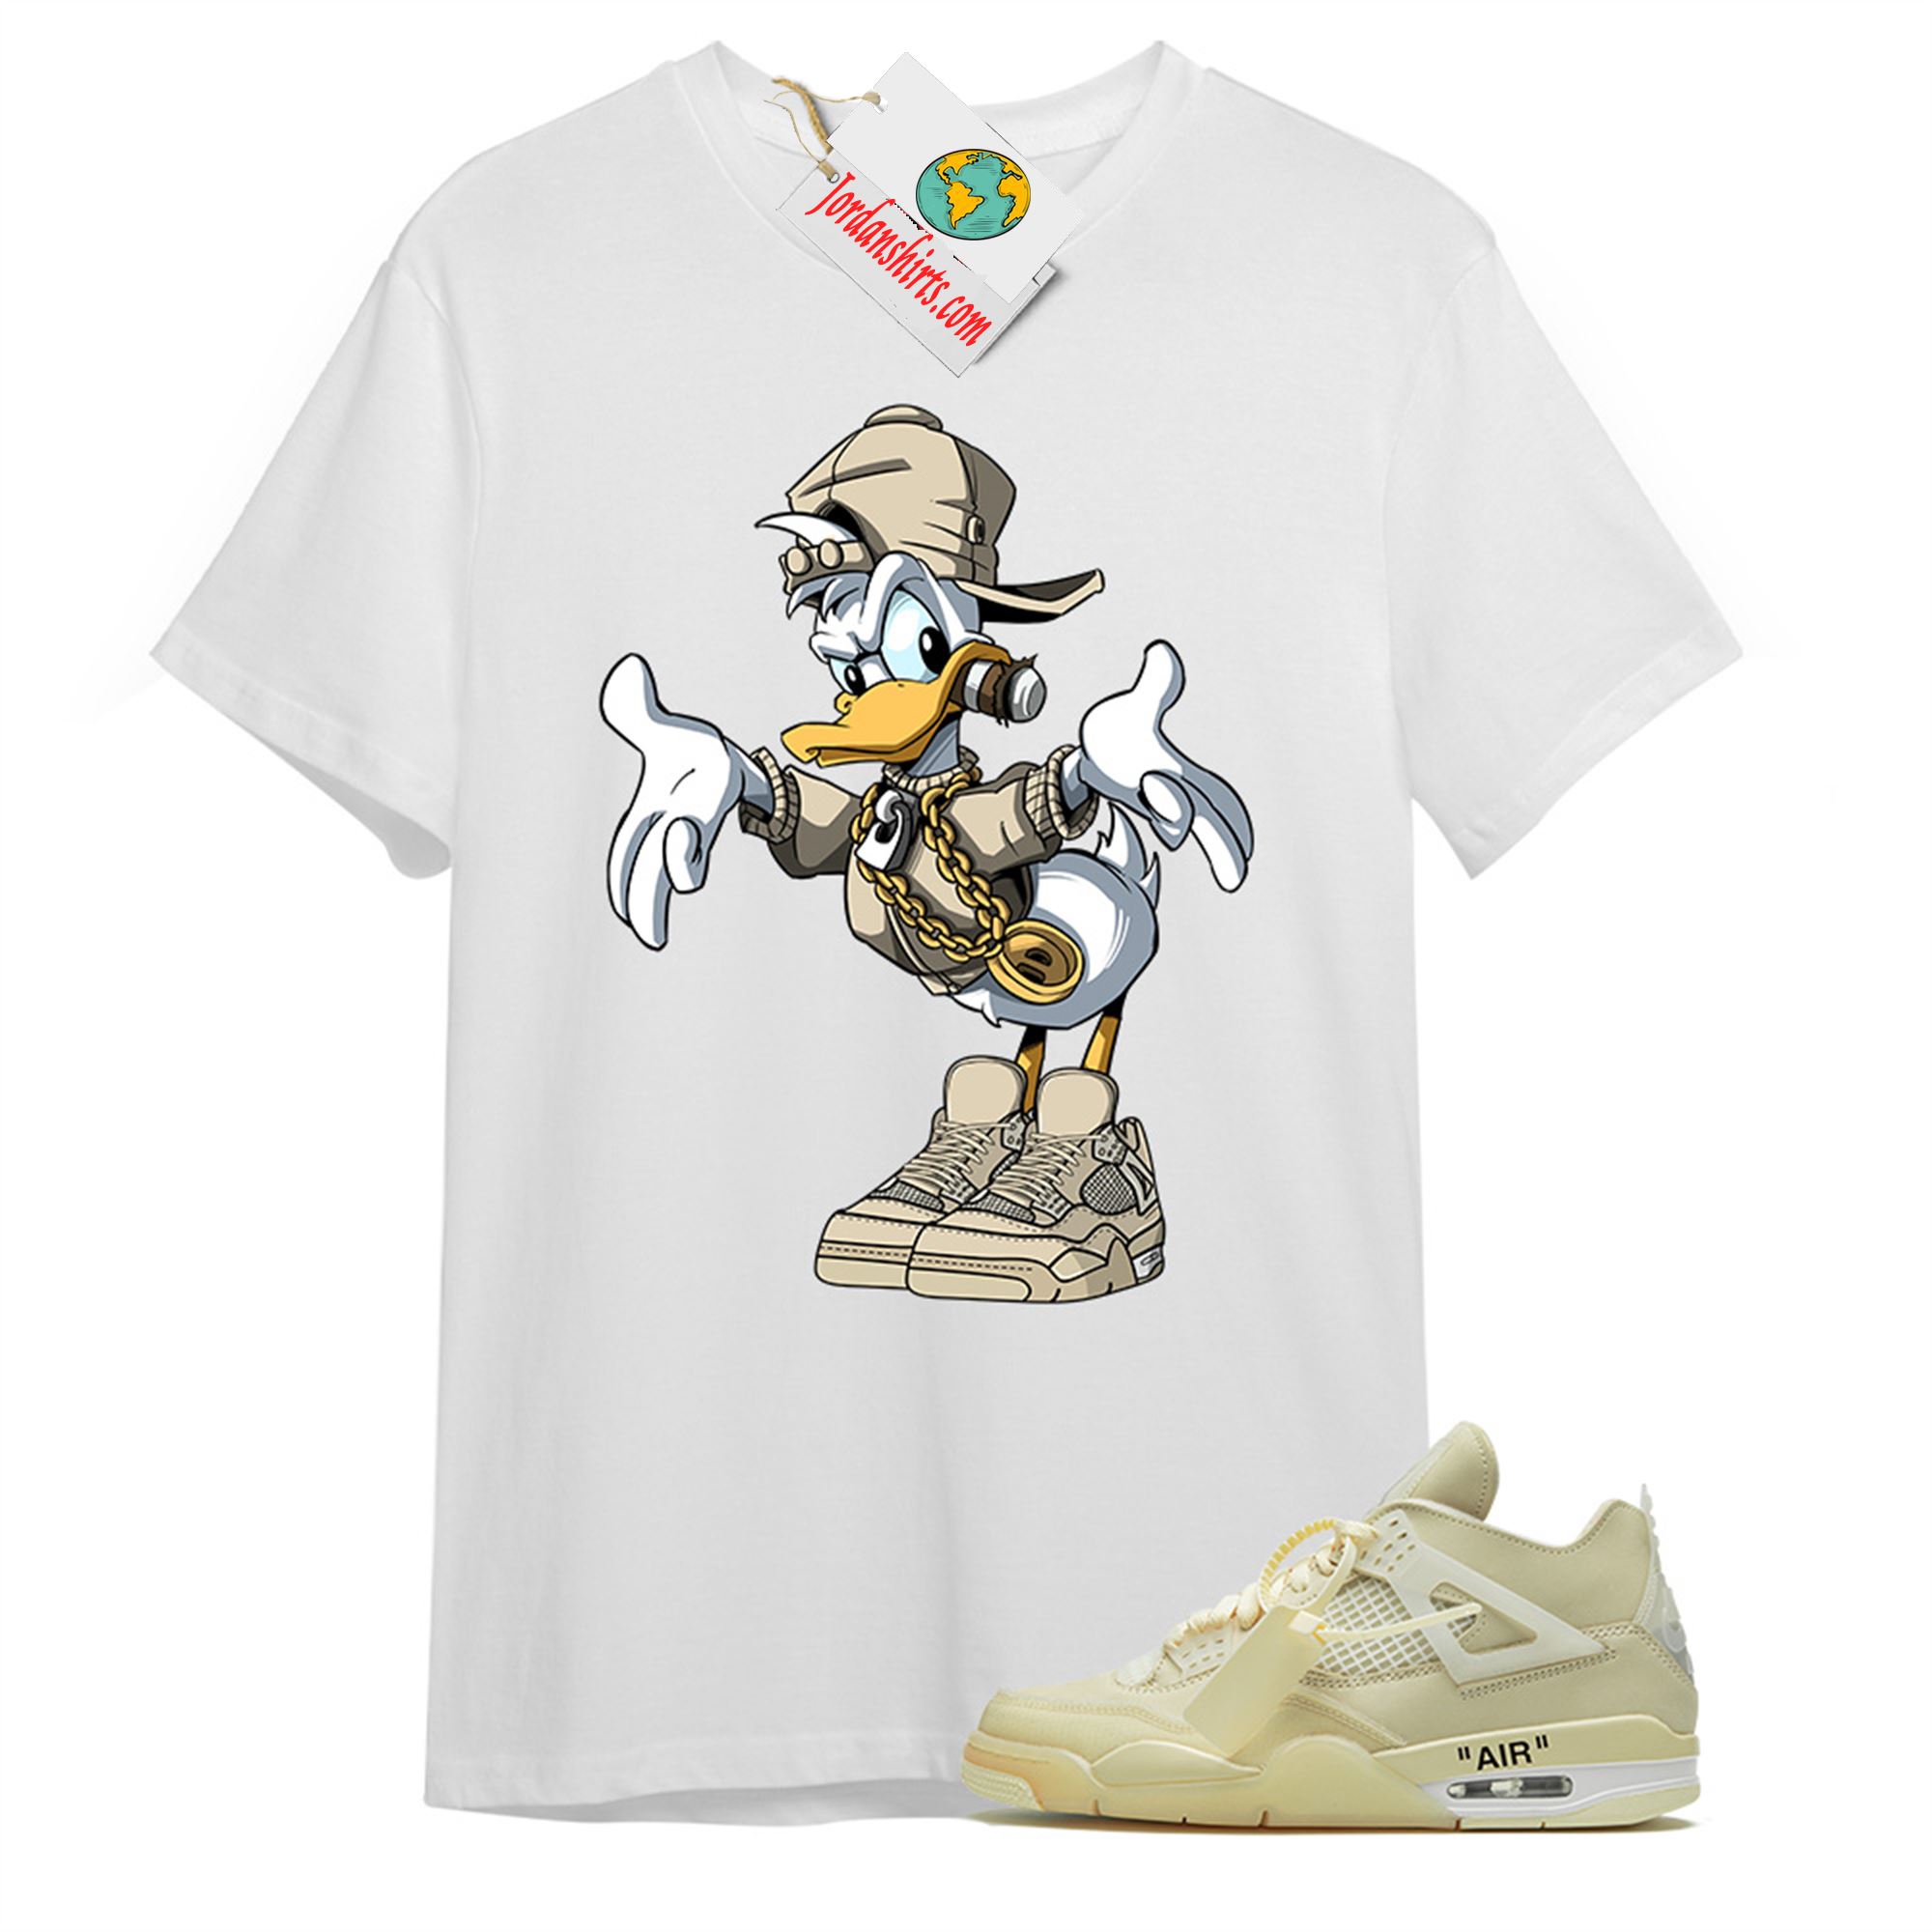 Jordan 4 Shirt, Donald Duck White T-shirt Air Jordan 4 Off-white 4s Full Size Up To 5xl